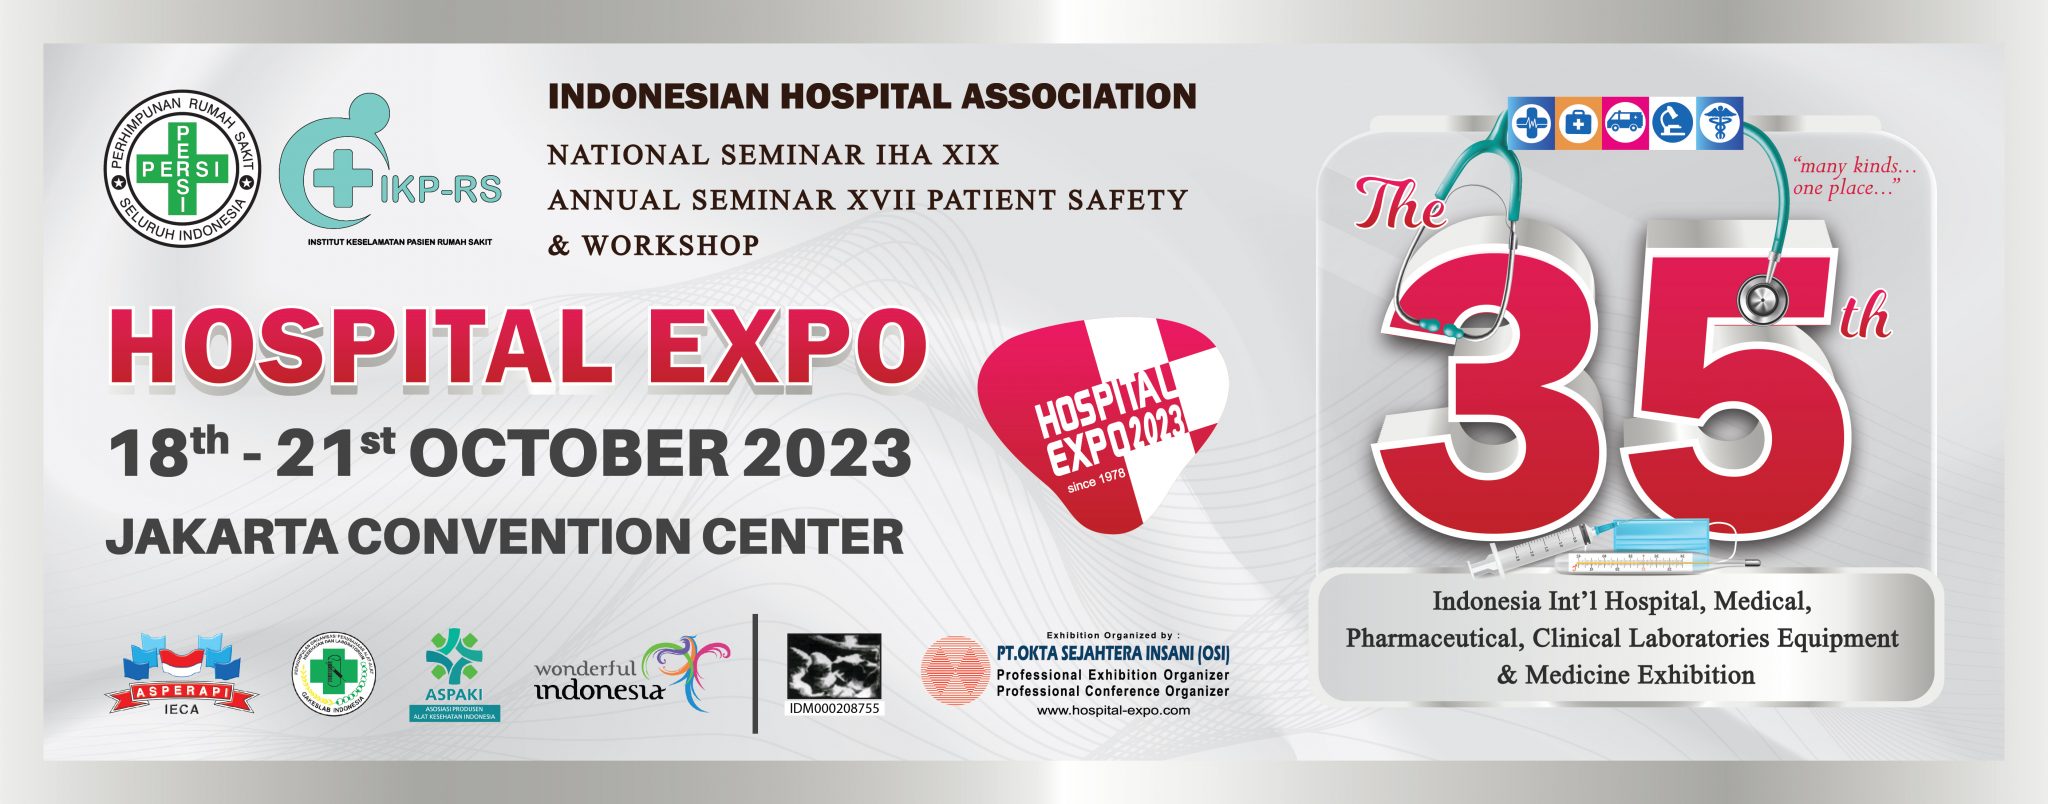 Indonesian Hospital Expo Jadwal Event, Info Pameran, Acara & Promo